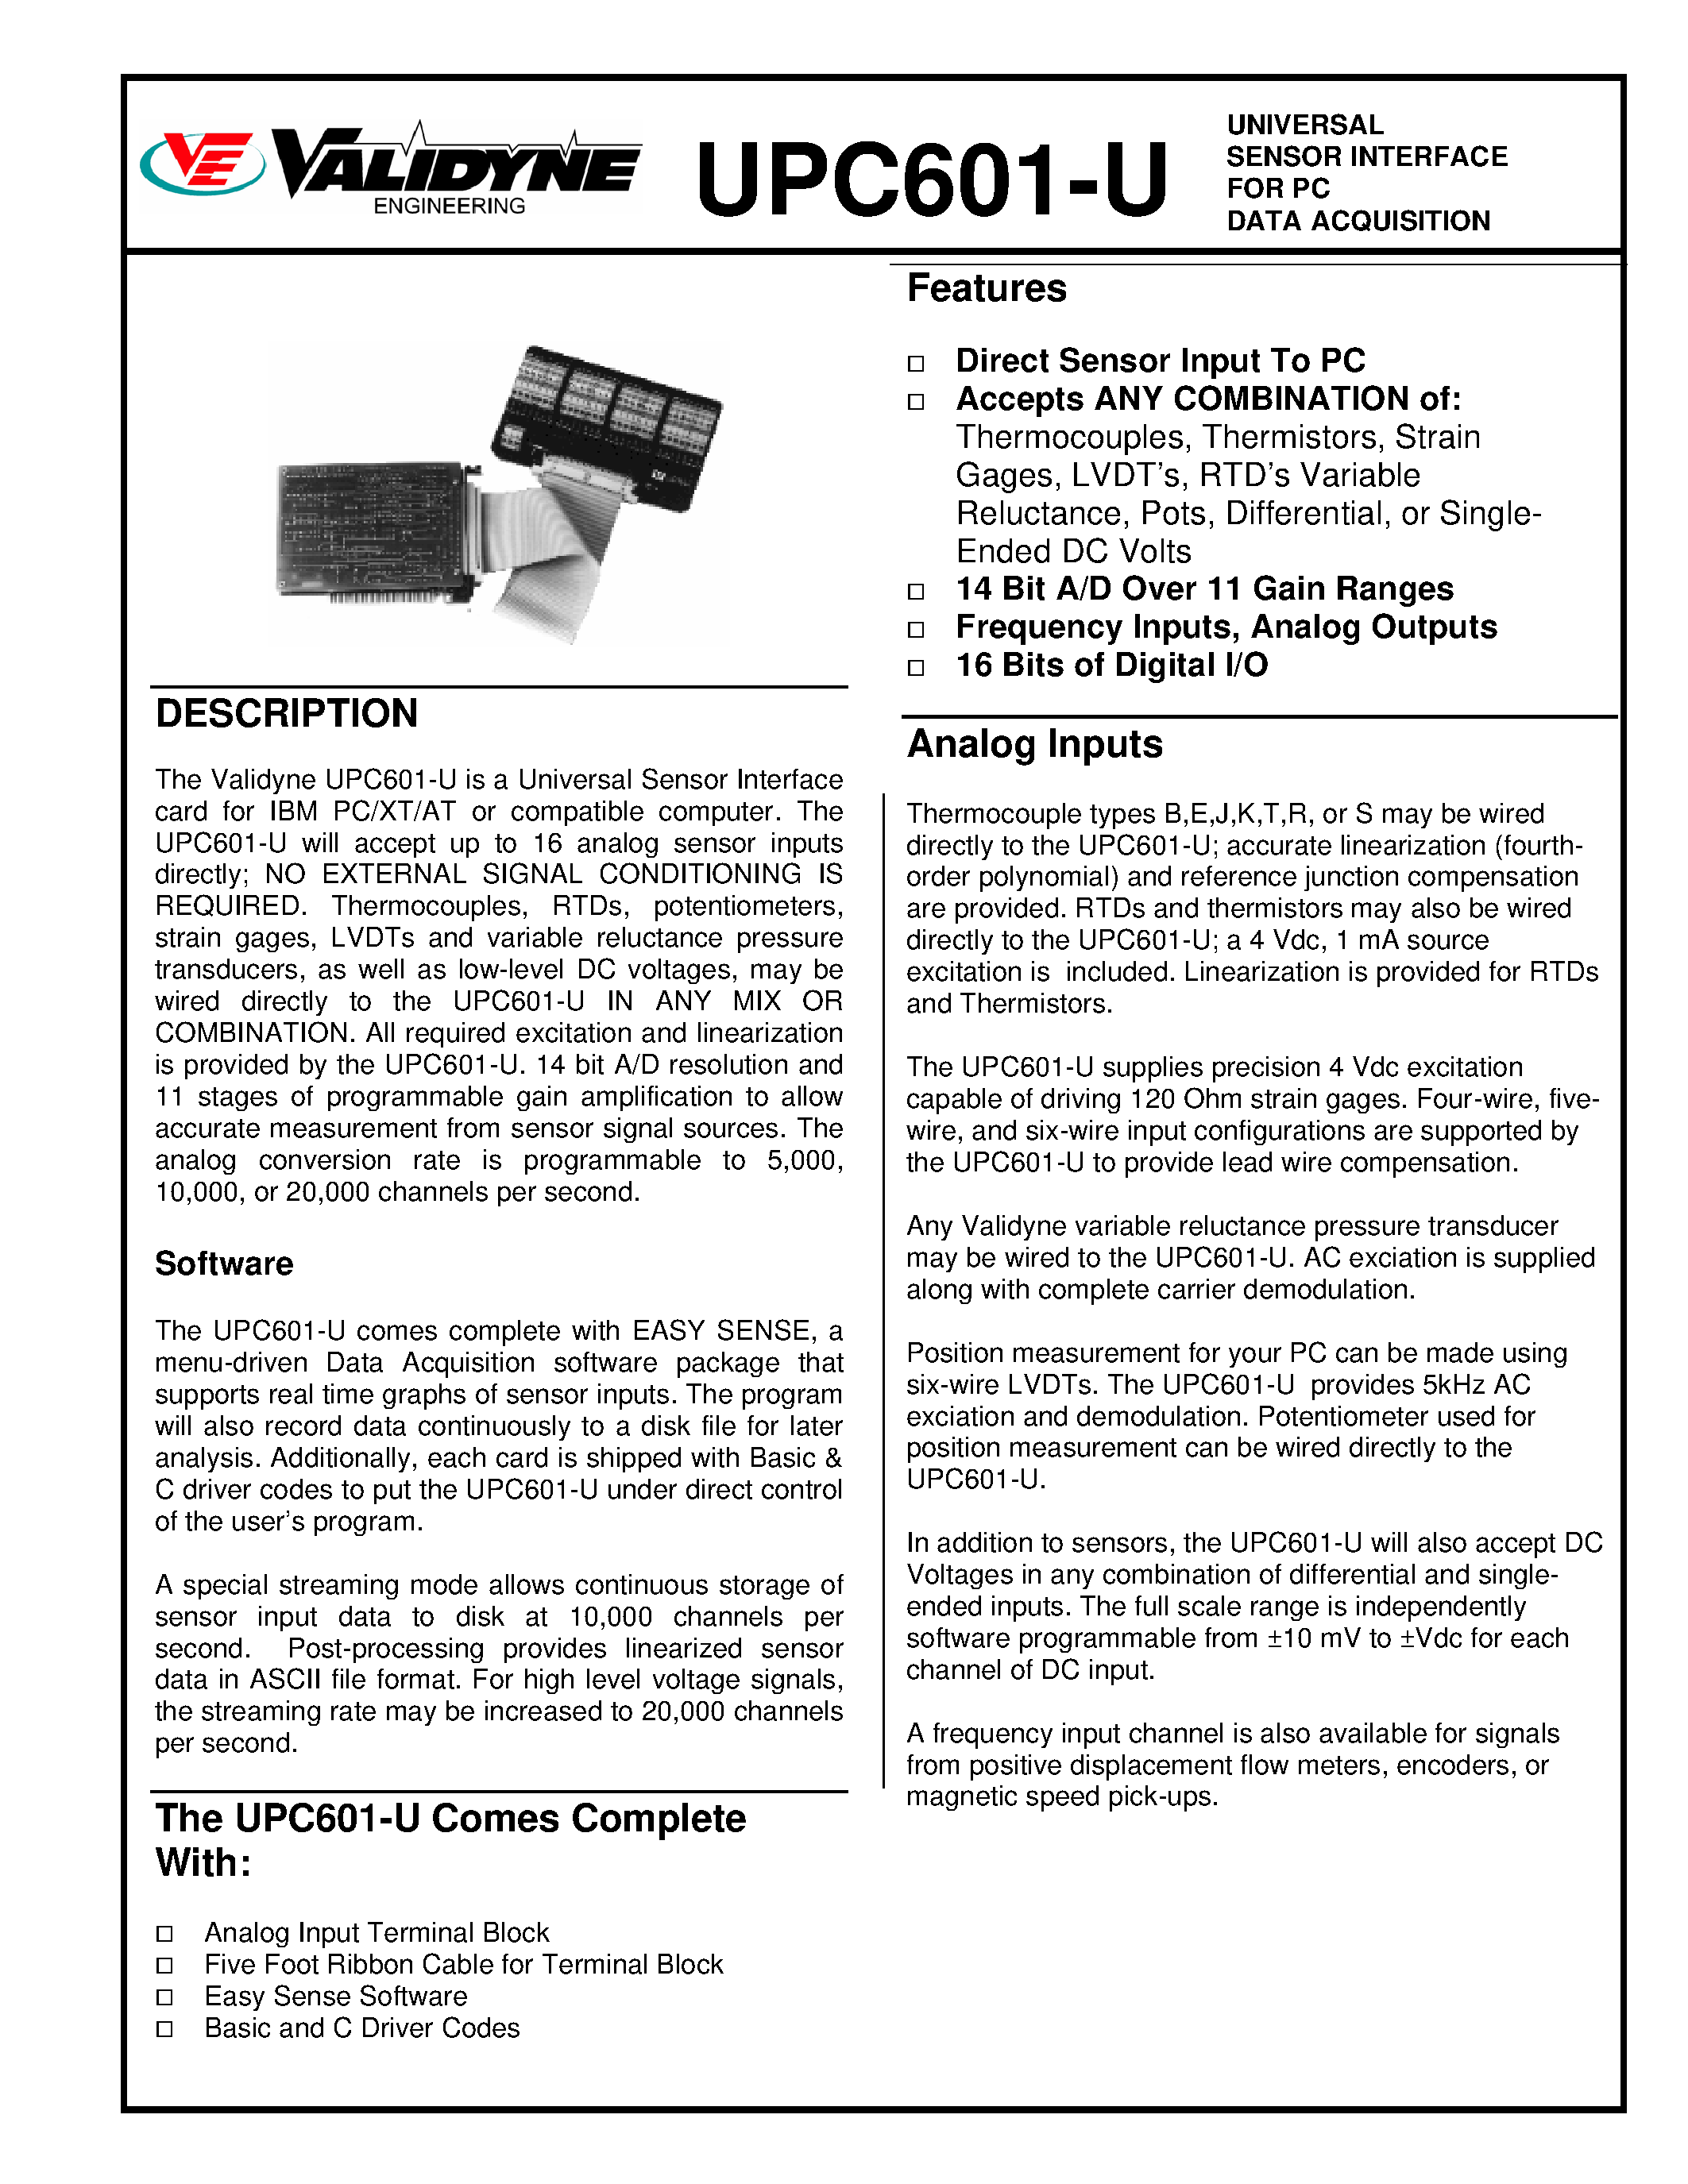 Datasheet UPC601-U - Universal Sensor Interface for PC Data Acquisition page 1